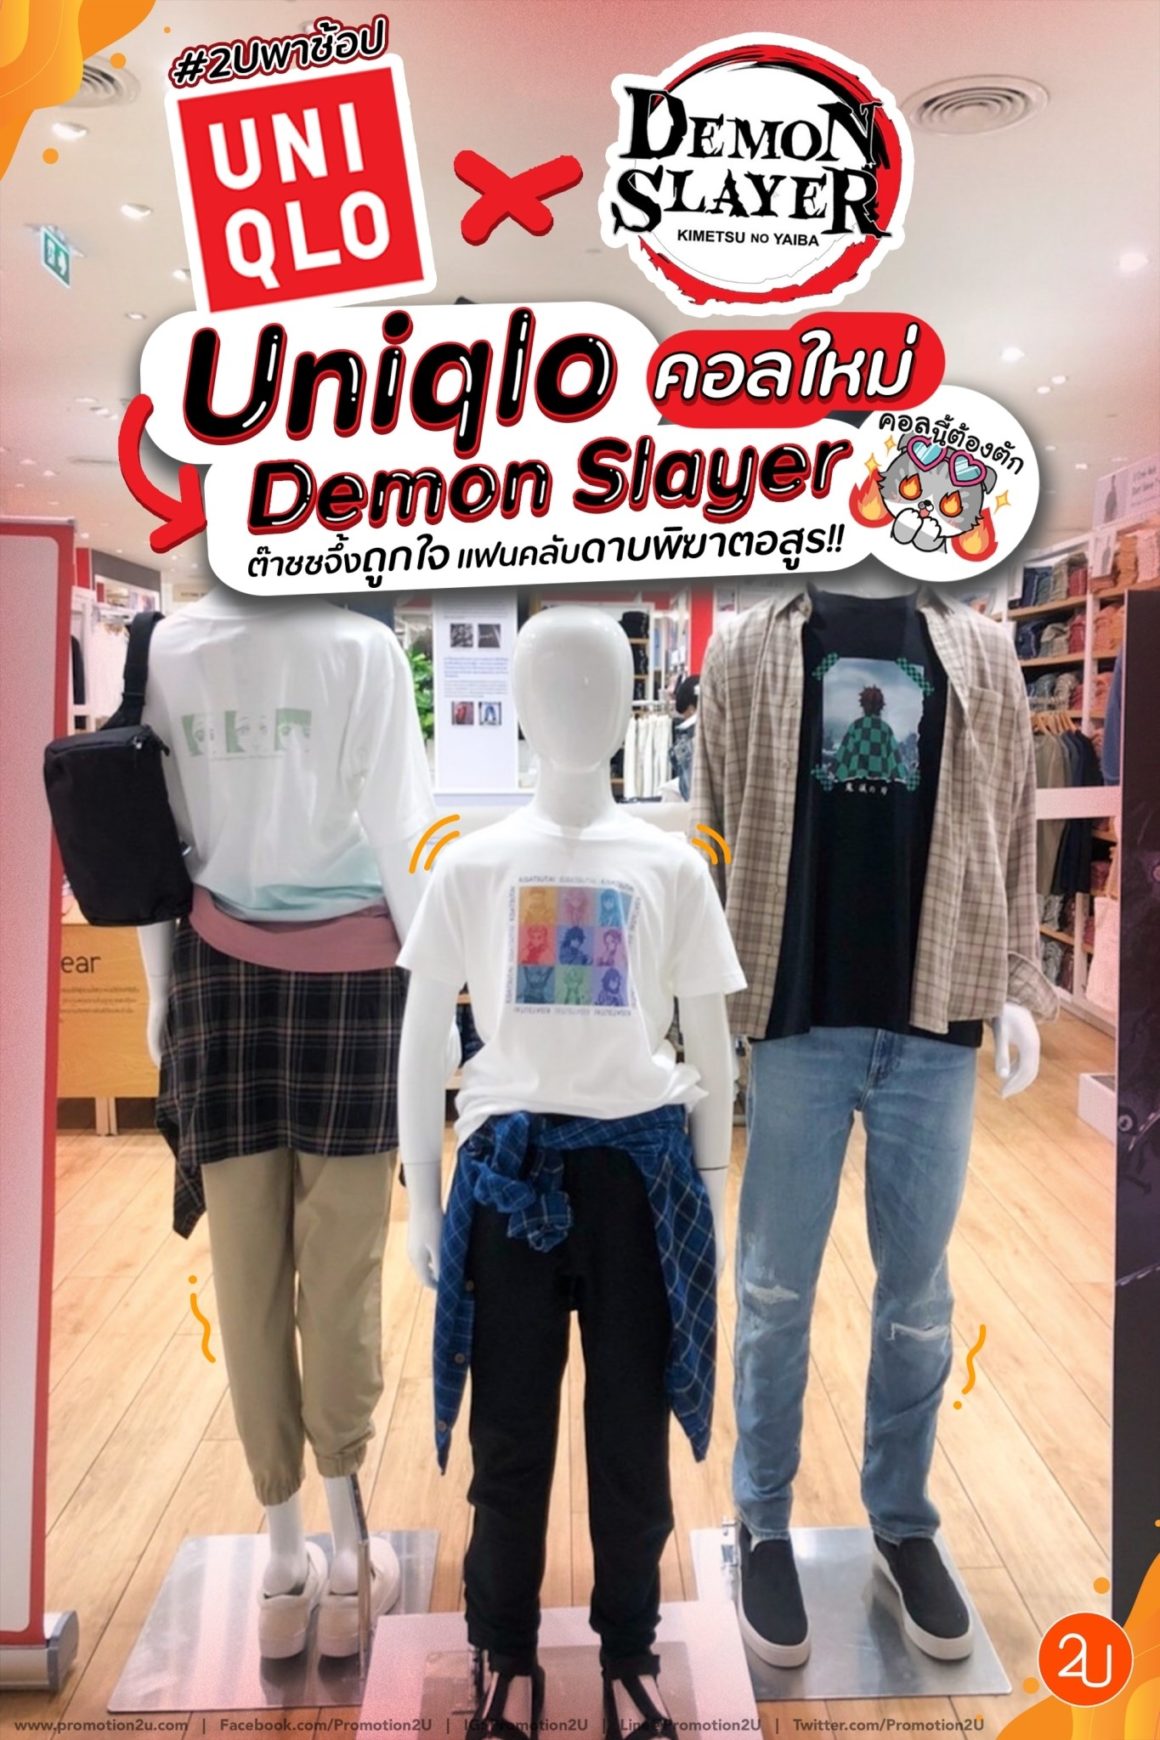 Uniqlo x Demon Slayer เสื้อผ้า คอลเลกชั่นใหม่สุดปัง! ถูกใจแฟนคลับดาบพิฆาตอสูรแน่นอน!!